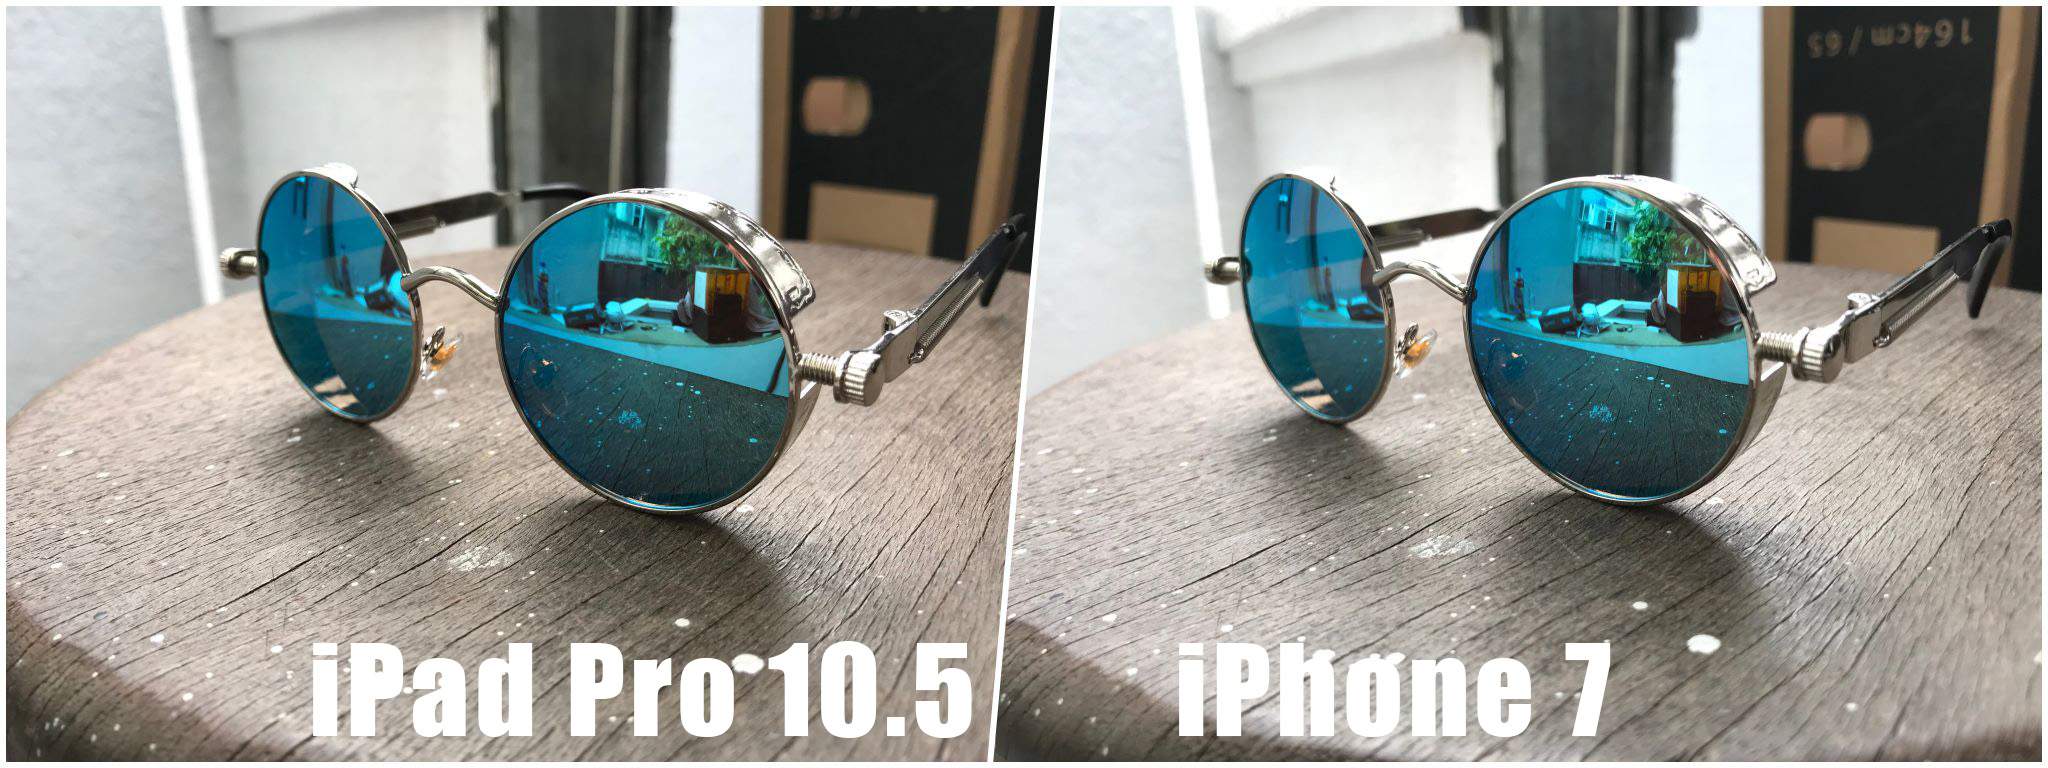 So sánh camera: iPad Pro 10.5 & iPhone 7